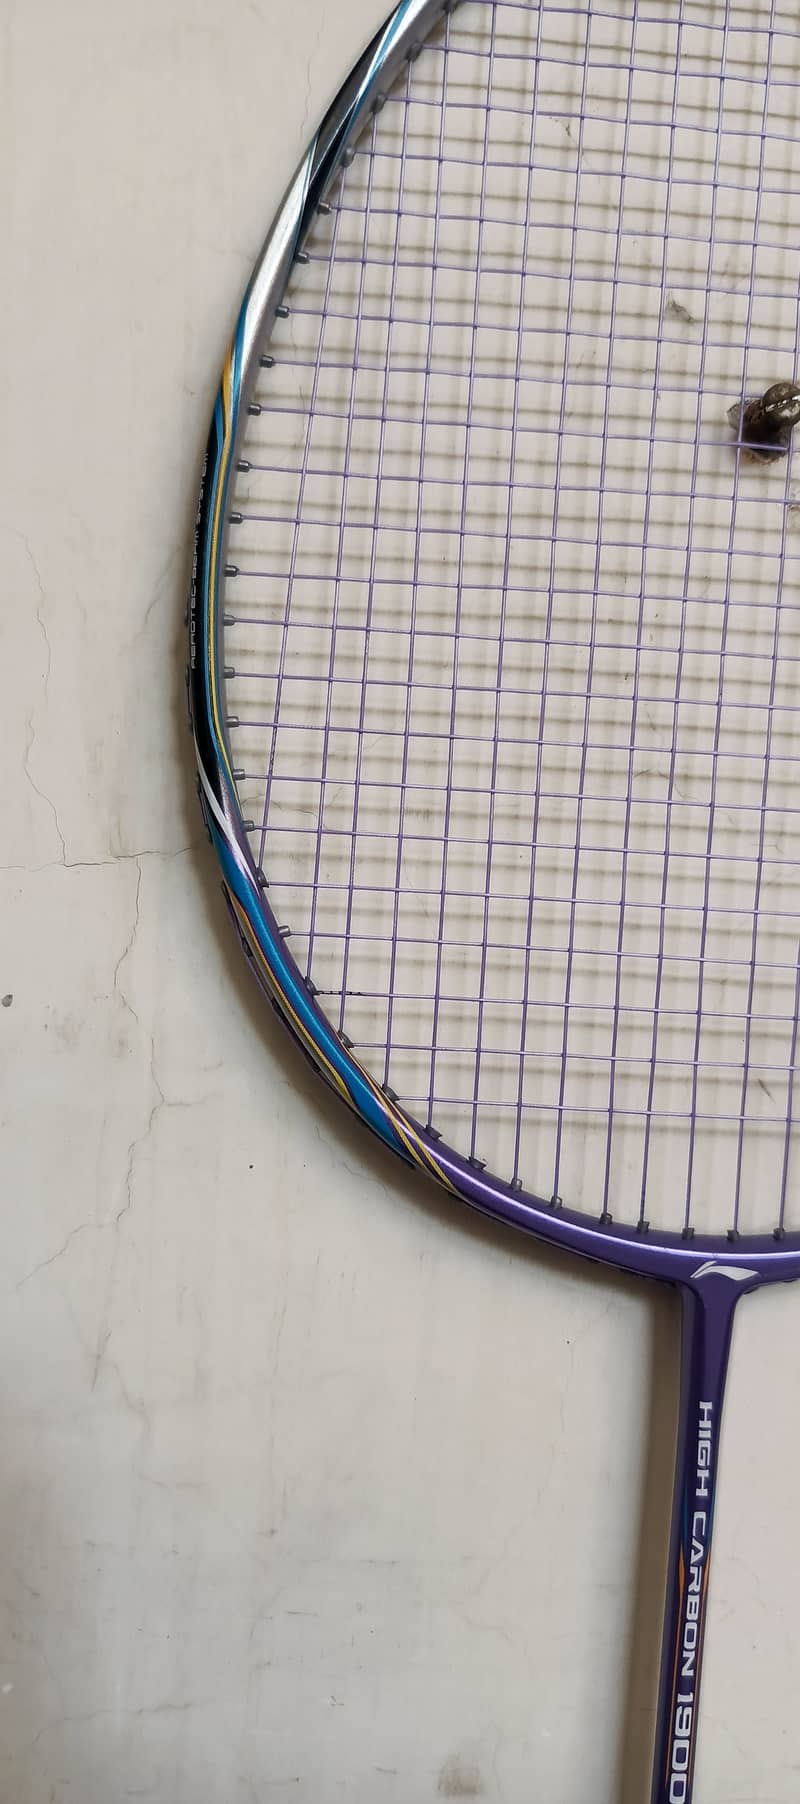 LI-NING HC 1900 Purple | Badminton Racket | Carbon Frame racket 11